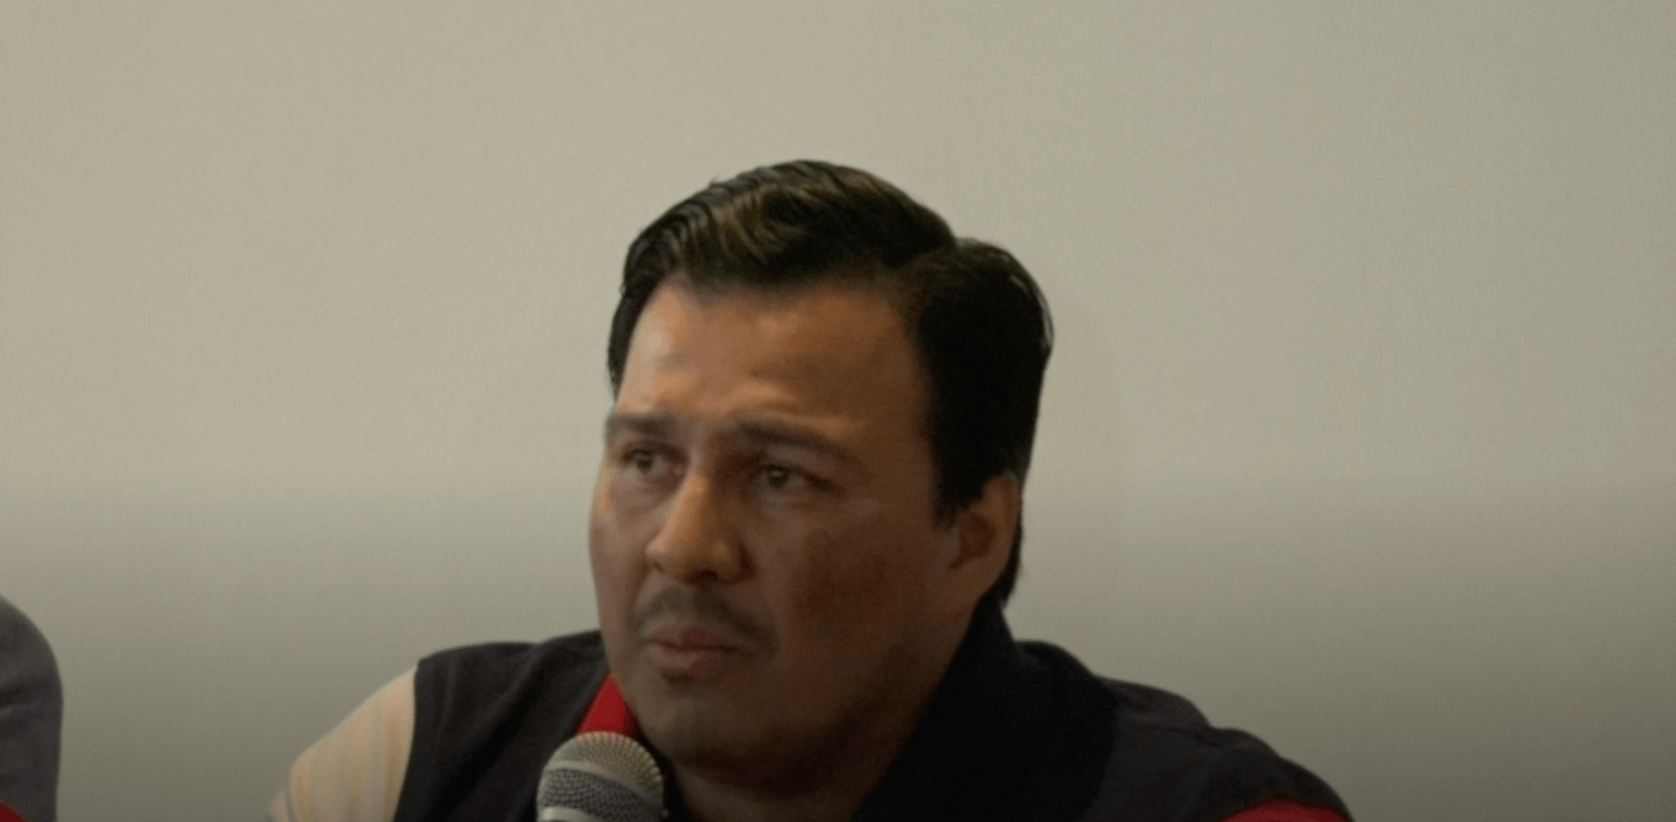 Ola Bini arrested in Ecuador